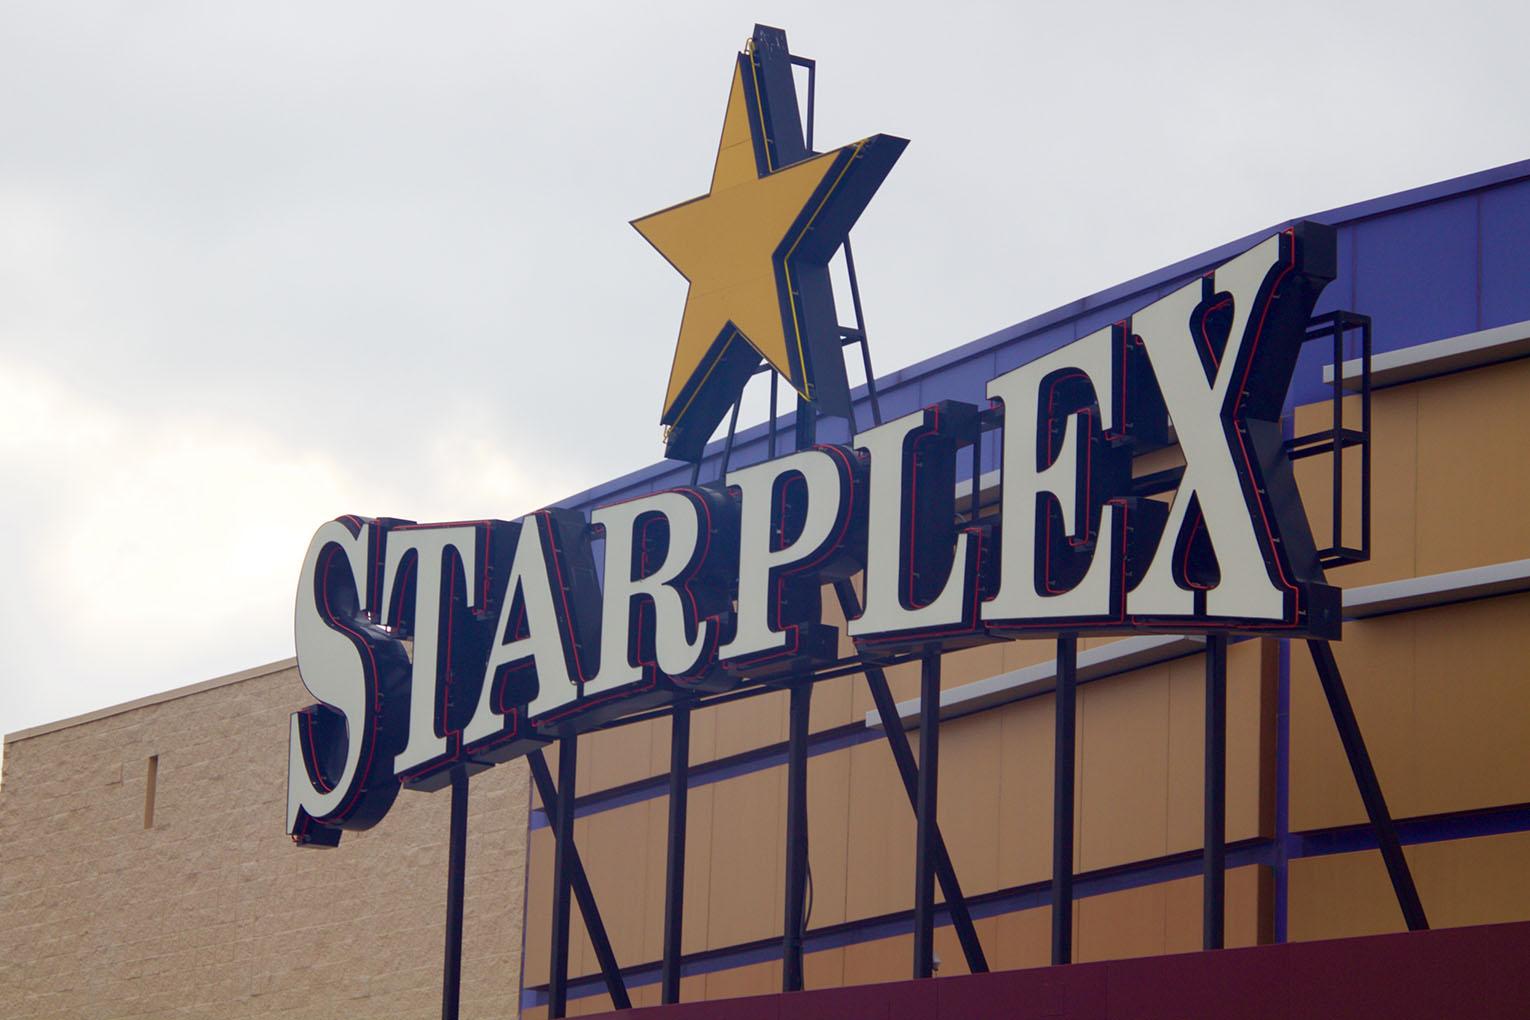 Starplex+theater+serves+community+through+retro+drive-in